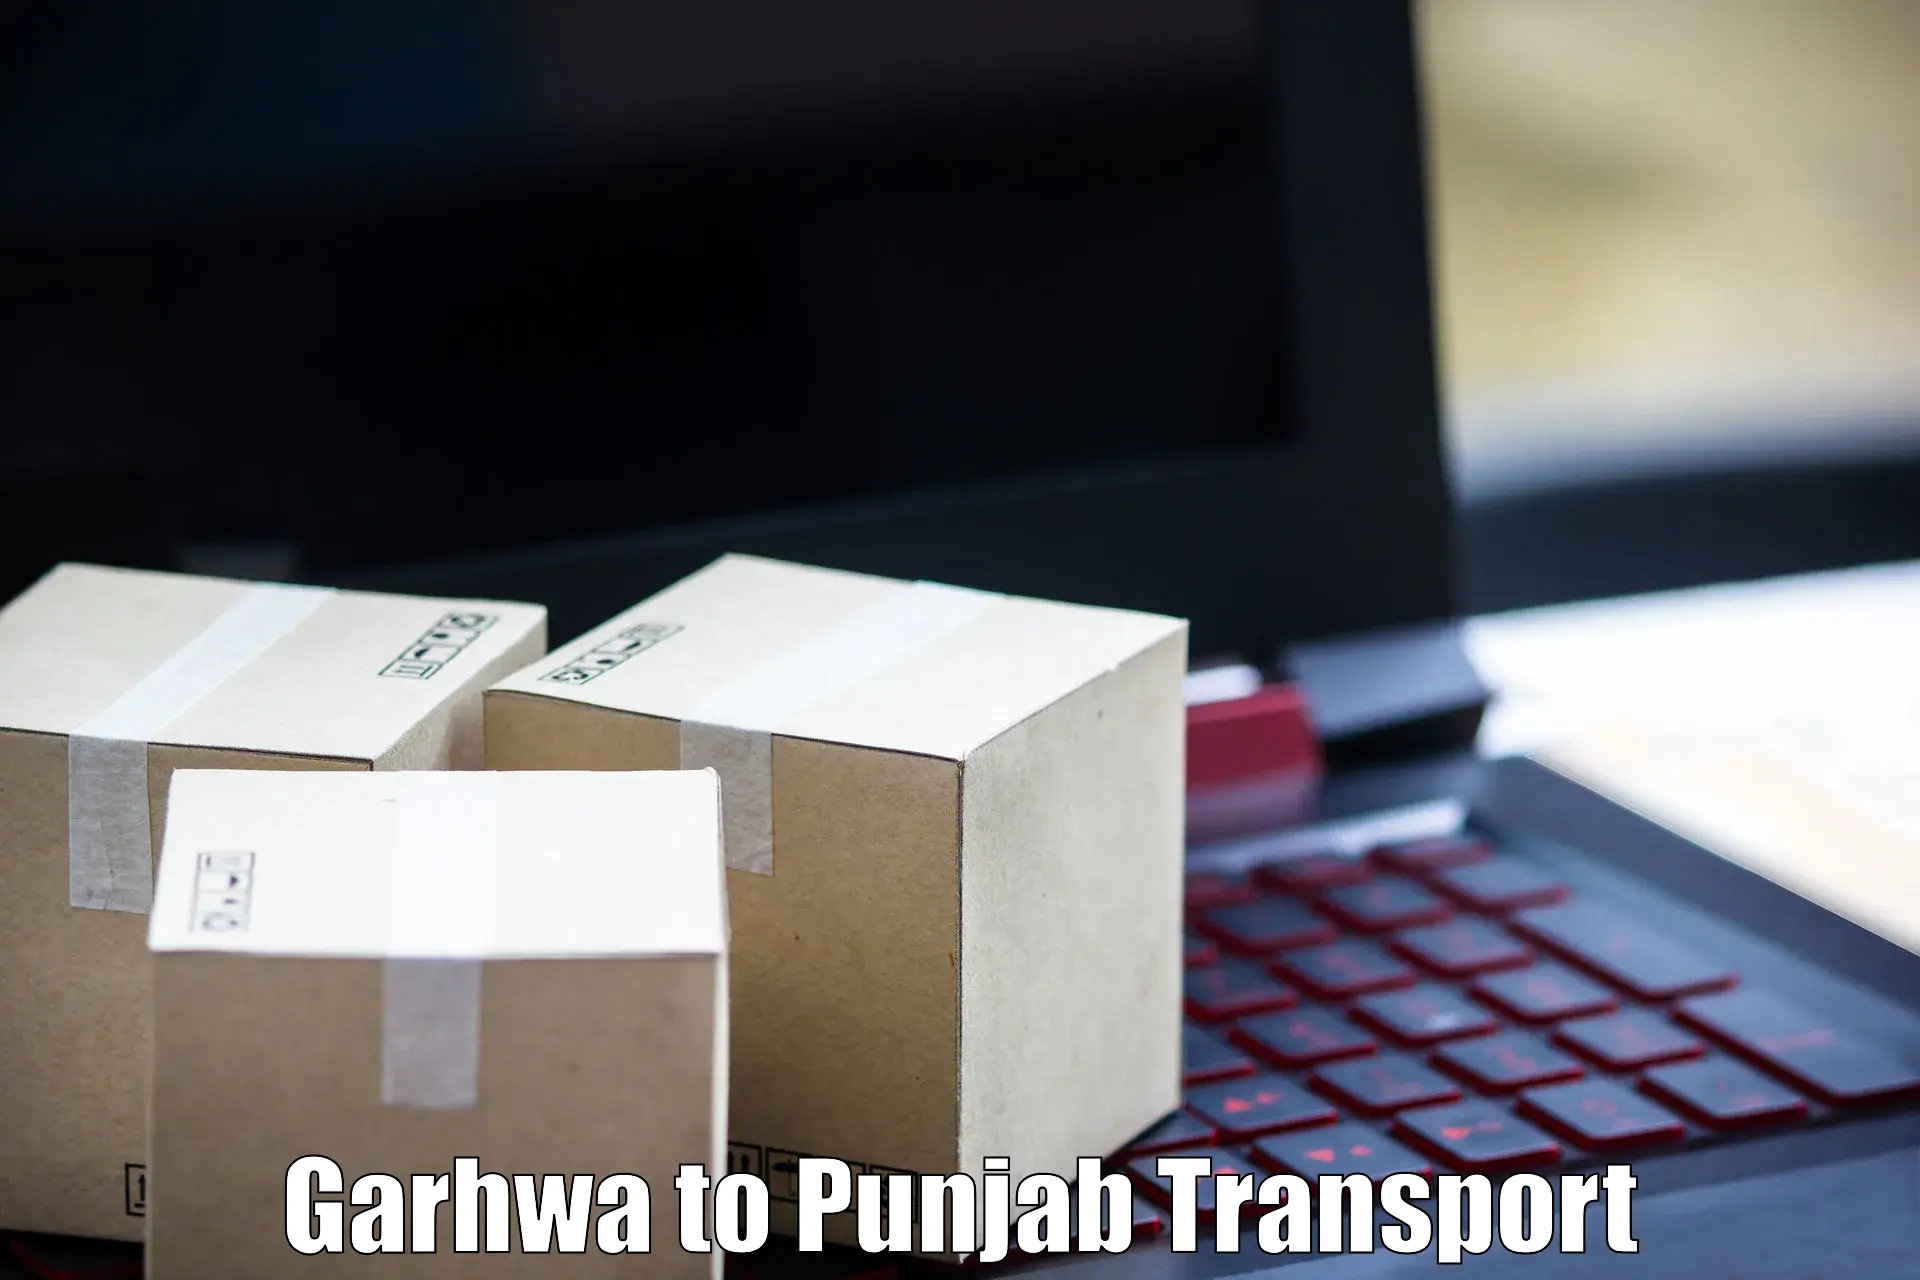 Online transport service Garhwa to Mohali